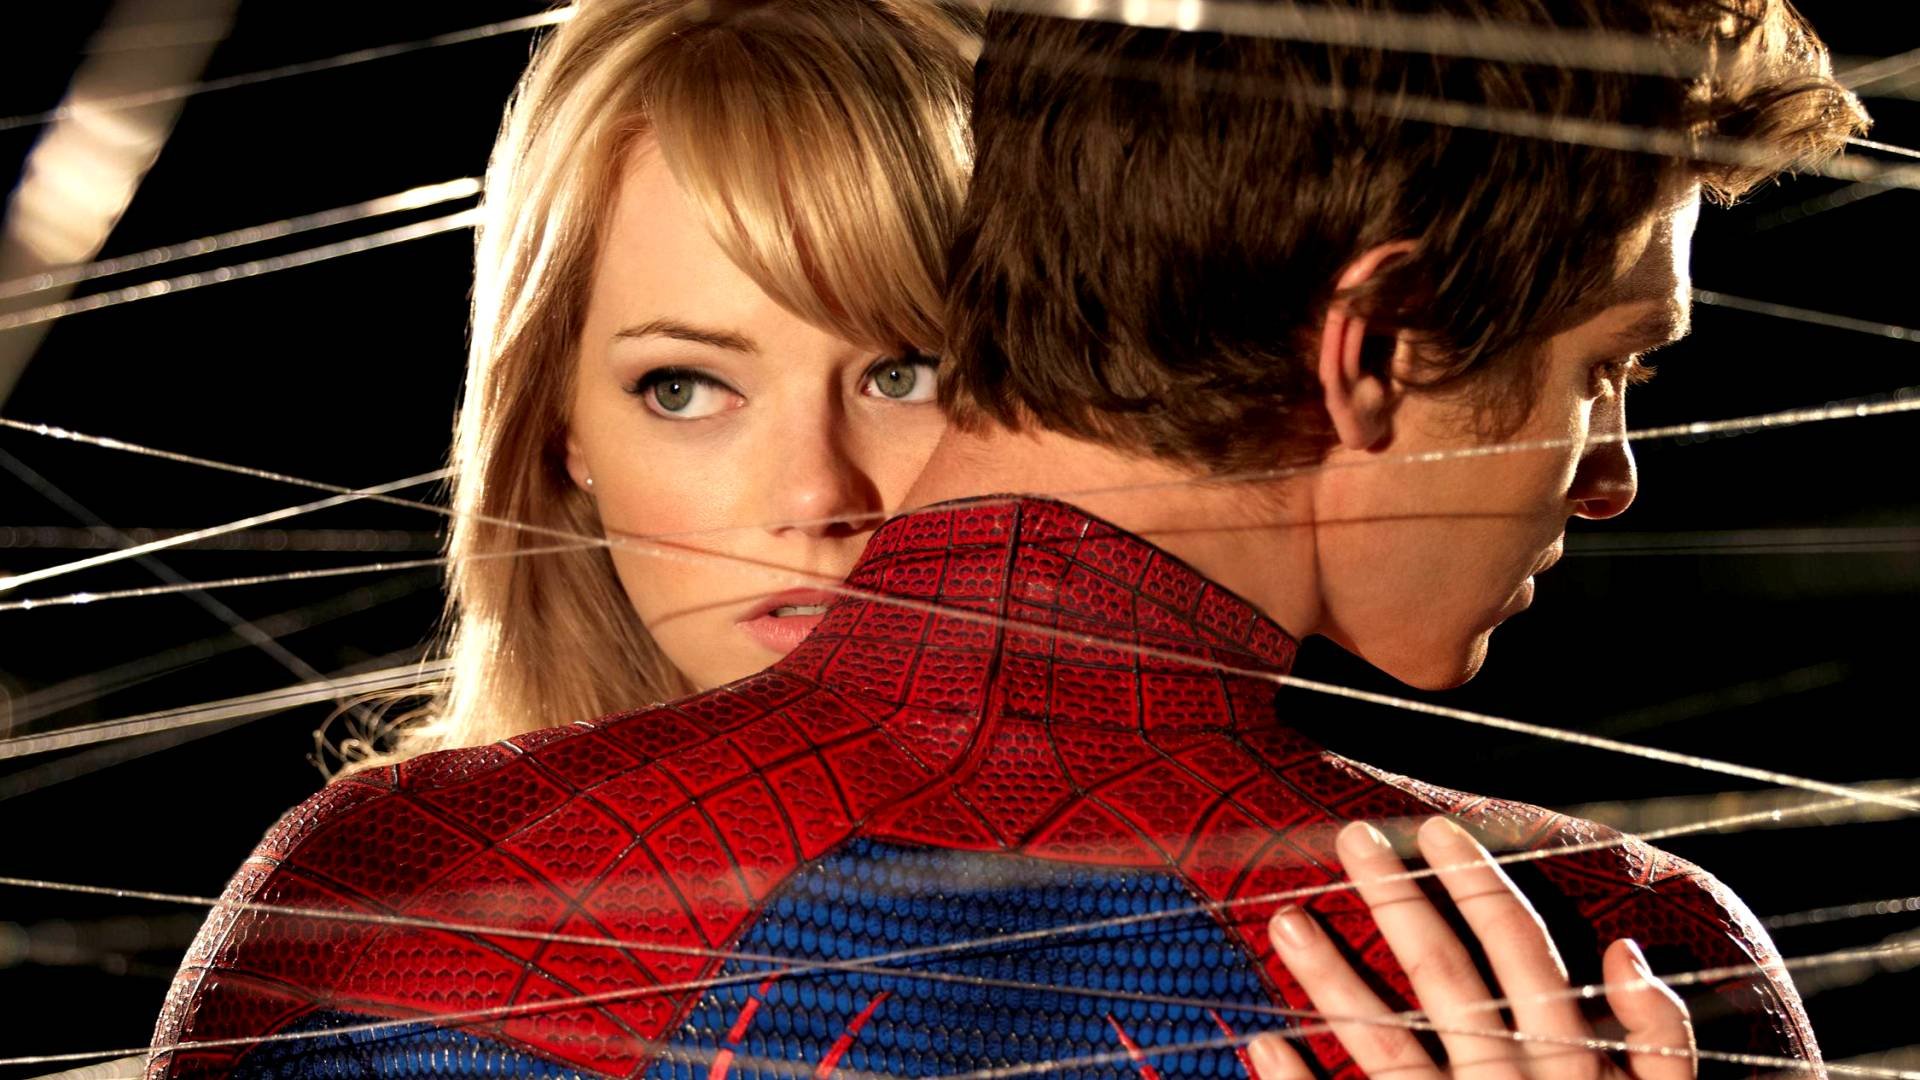 The Amazing Spider Man Andrew Garfield